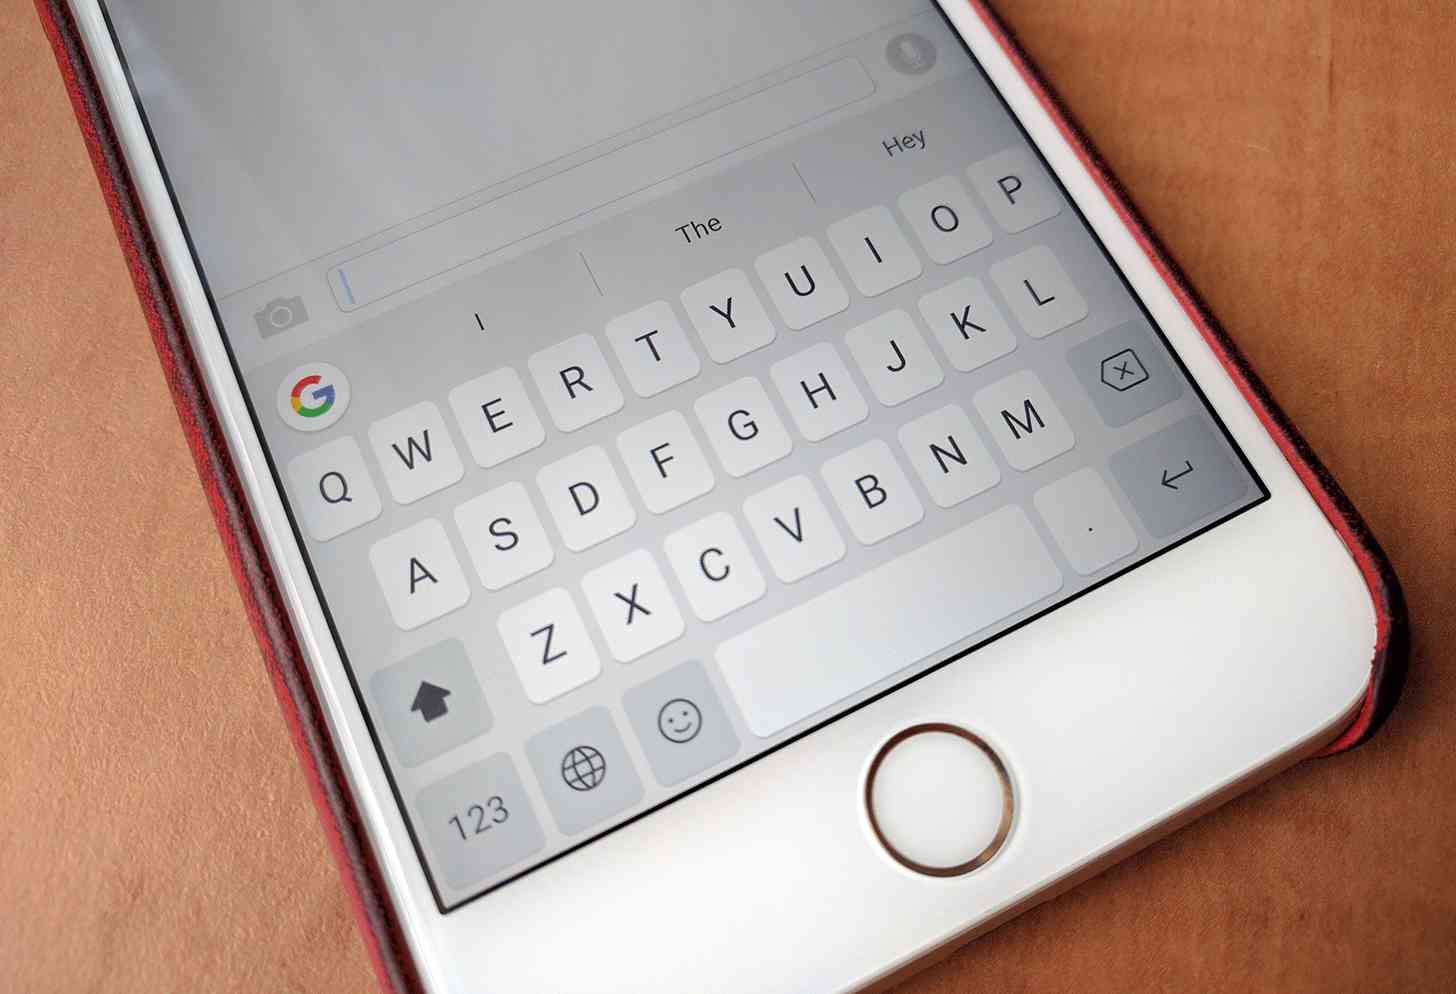 Google Gboard keyboard for iOS